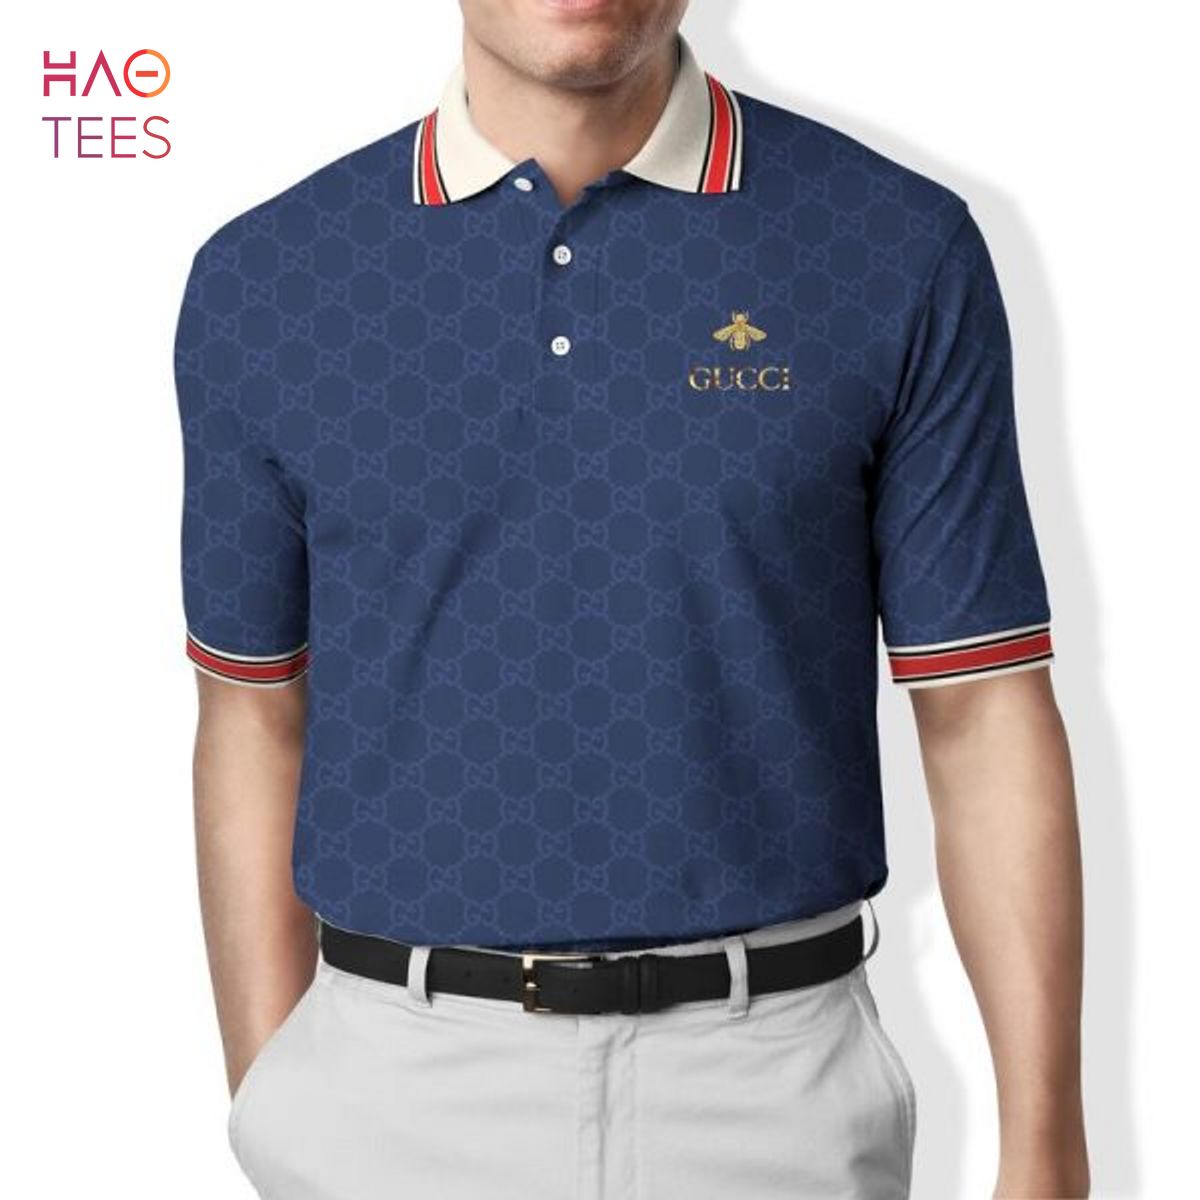 Gucci Luxury Brand Polo Shirt